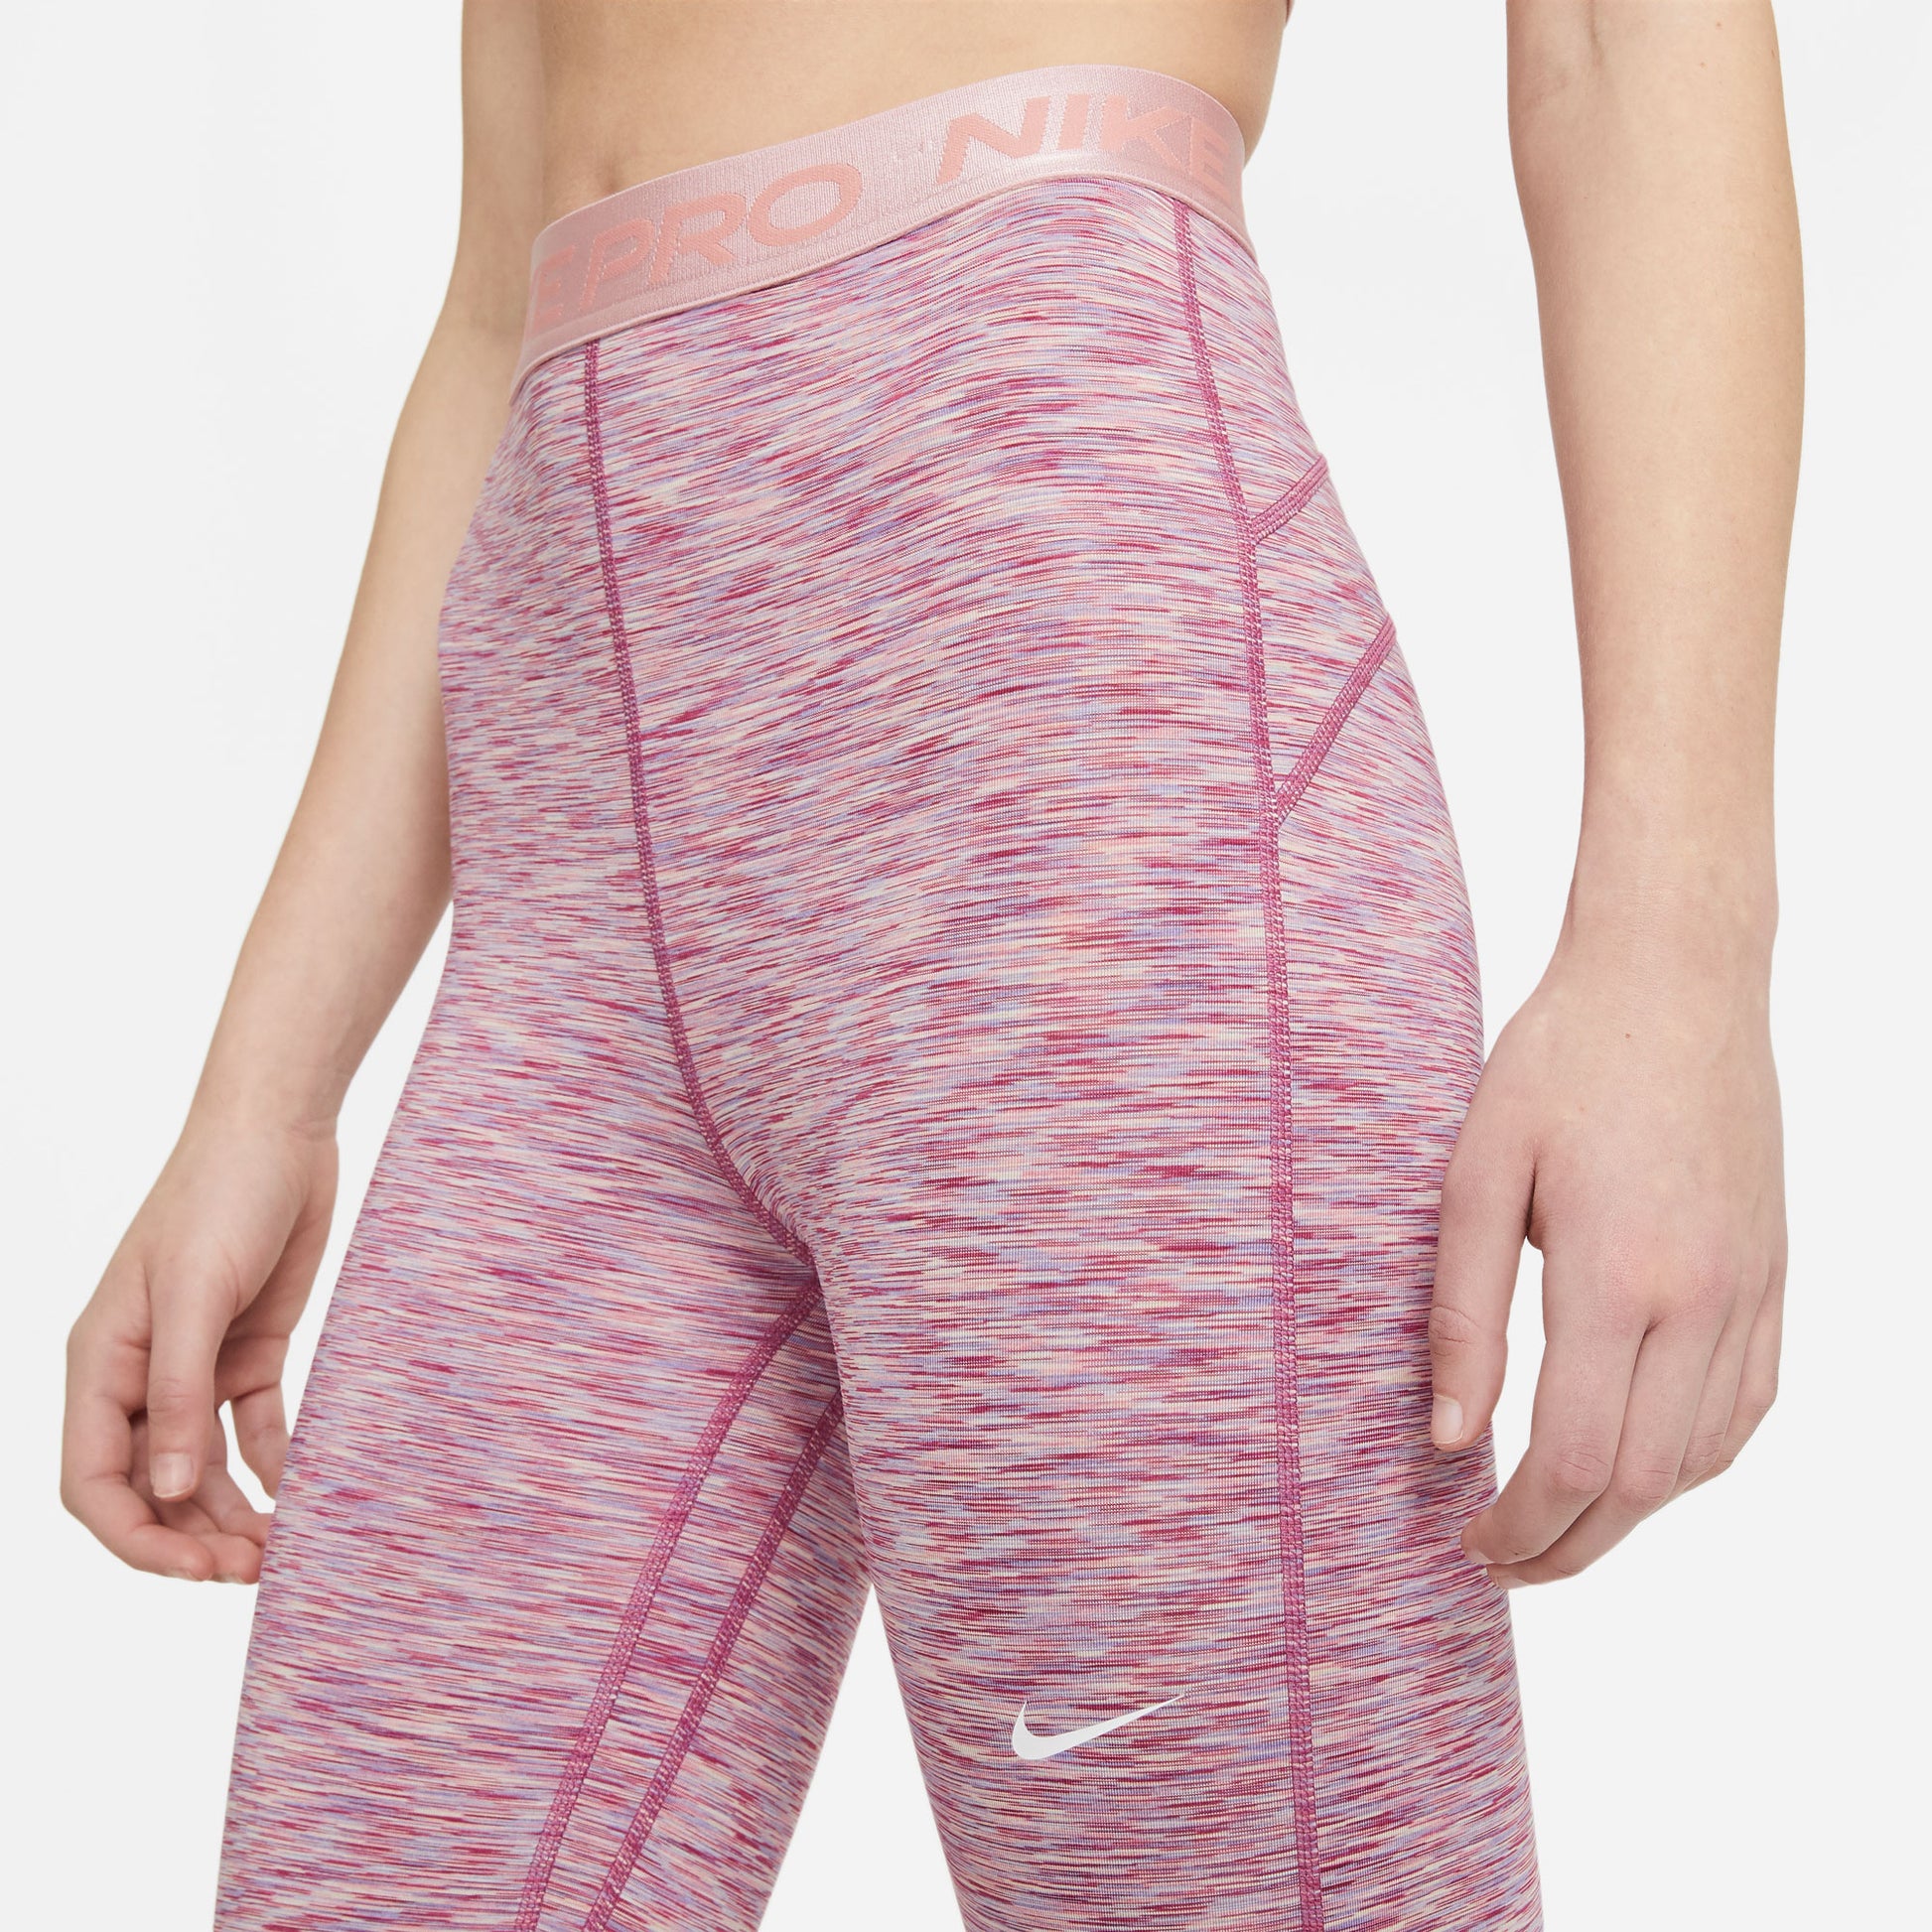 Nike Women's Cropped Space-Dye Tights Pink (4)